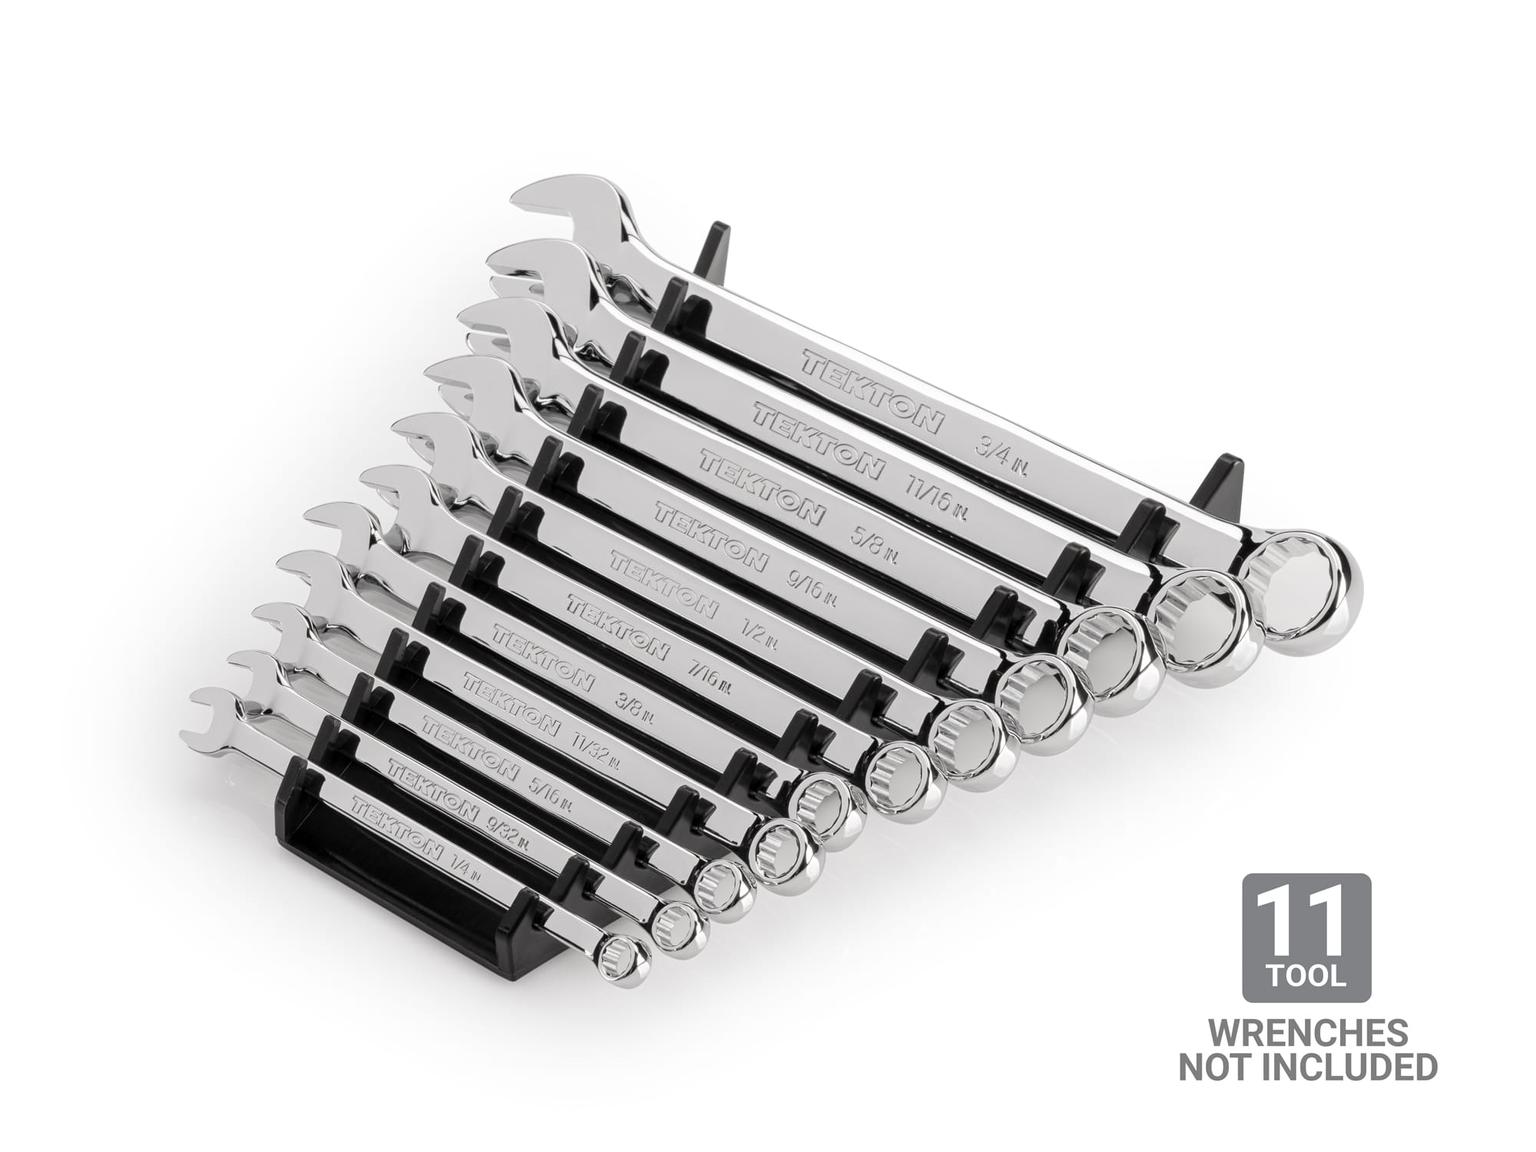 TEKTON OWP12111-T 11-Tool Combination Wrench Organizer Rack (Black)